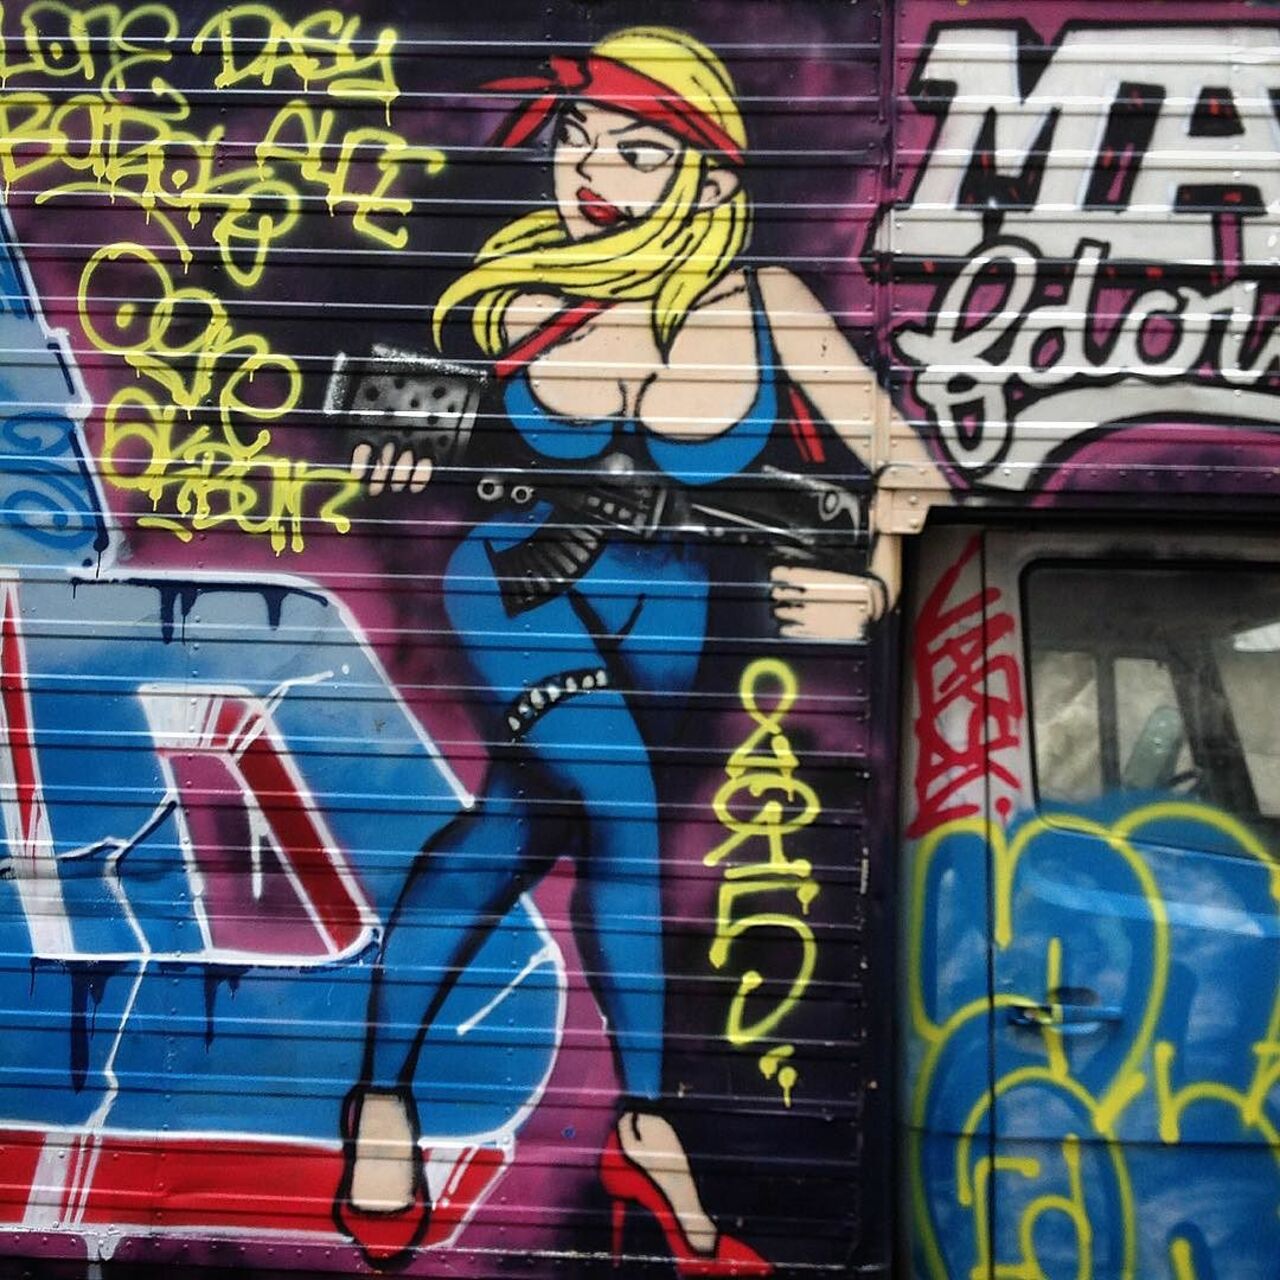 #Paris #graffiti photo by @stefetlinda http://ift.tt/201DW74 #StreetArt https://t.co/JIJr4S8p3R